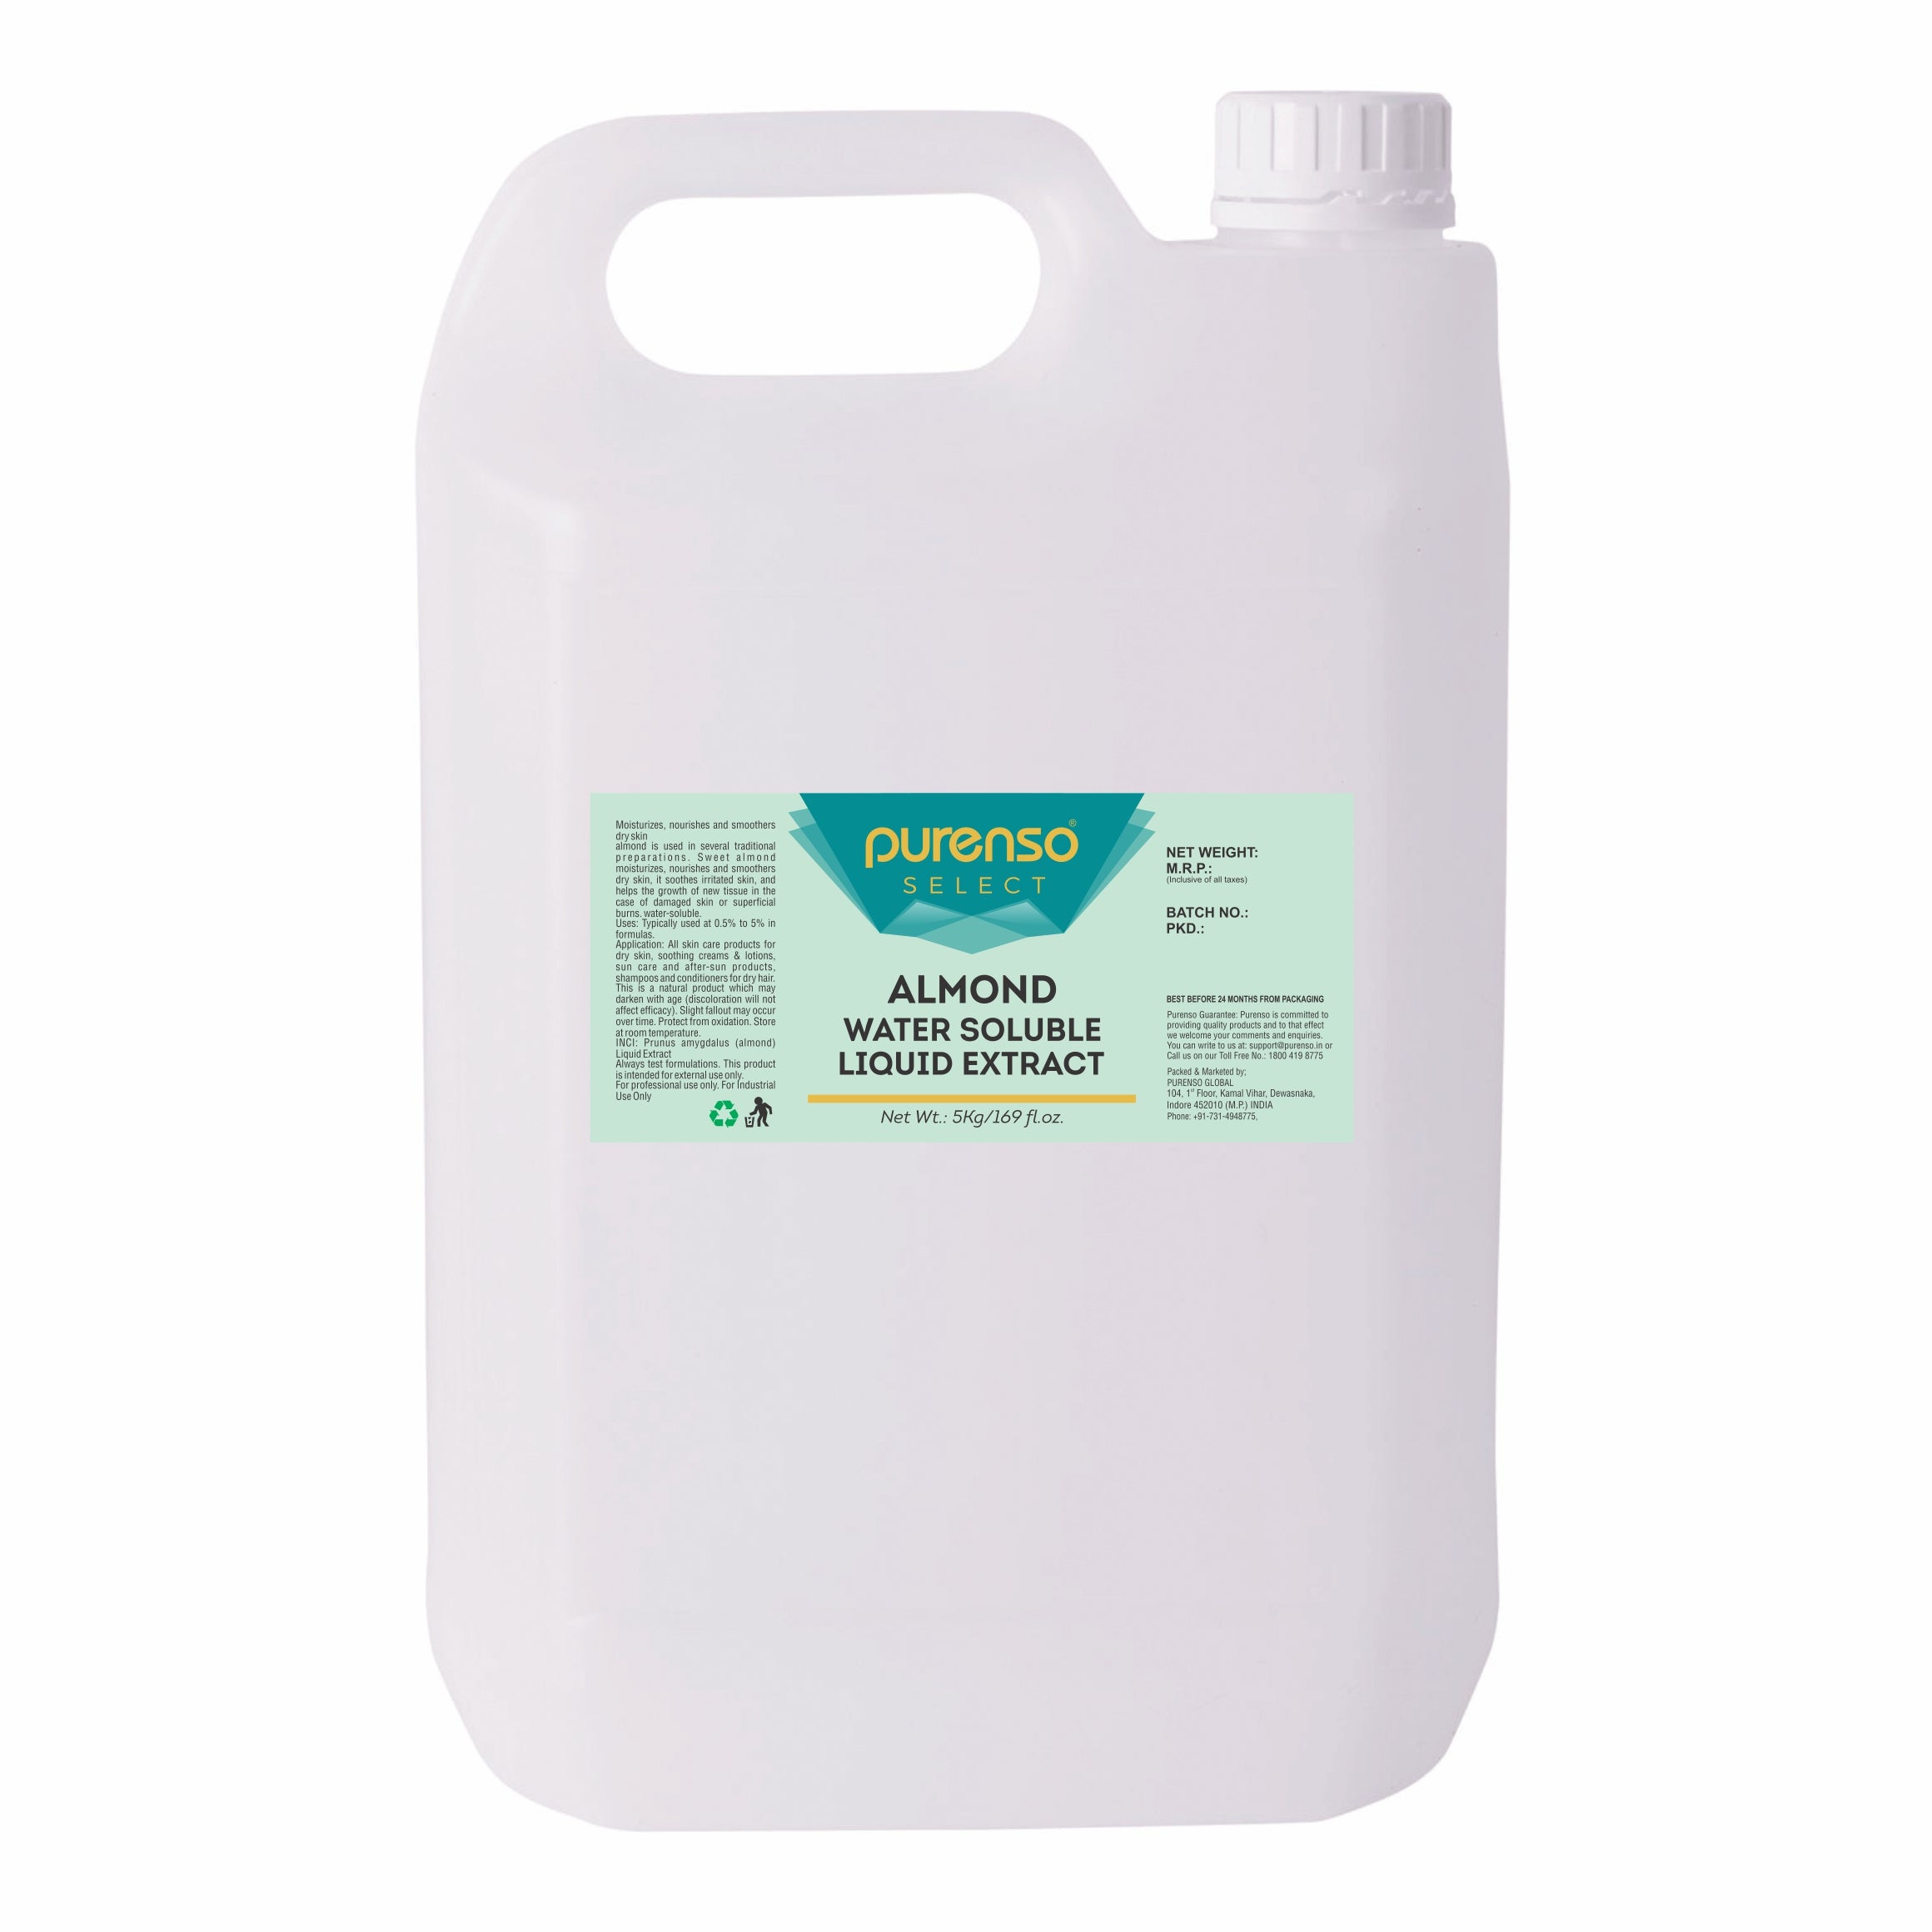 Base 1000 ml, 0 mg/ml, VPG 50-50 - Fluid Gourmet Liquid Swiss - E